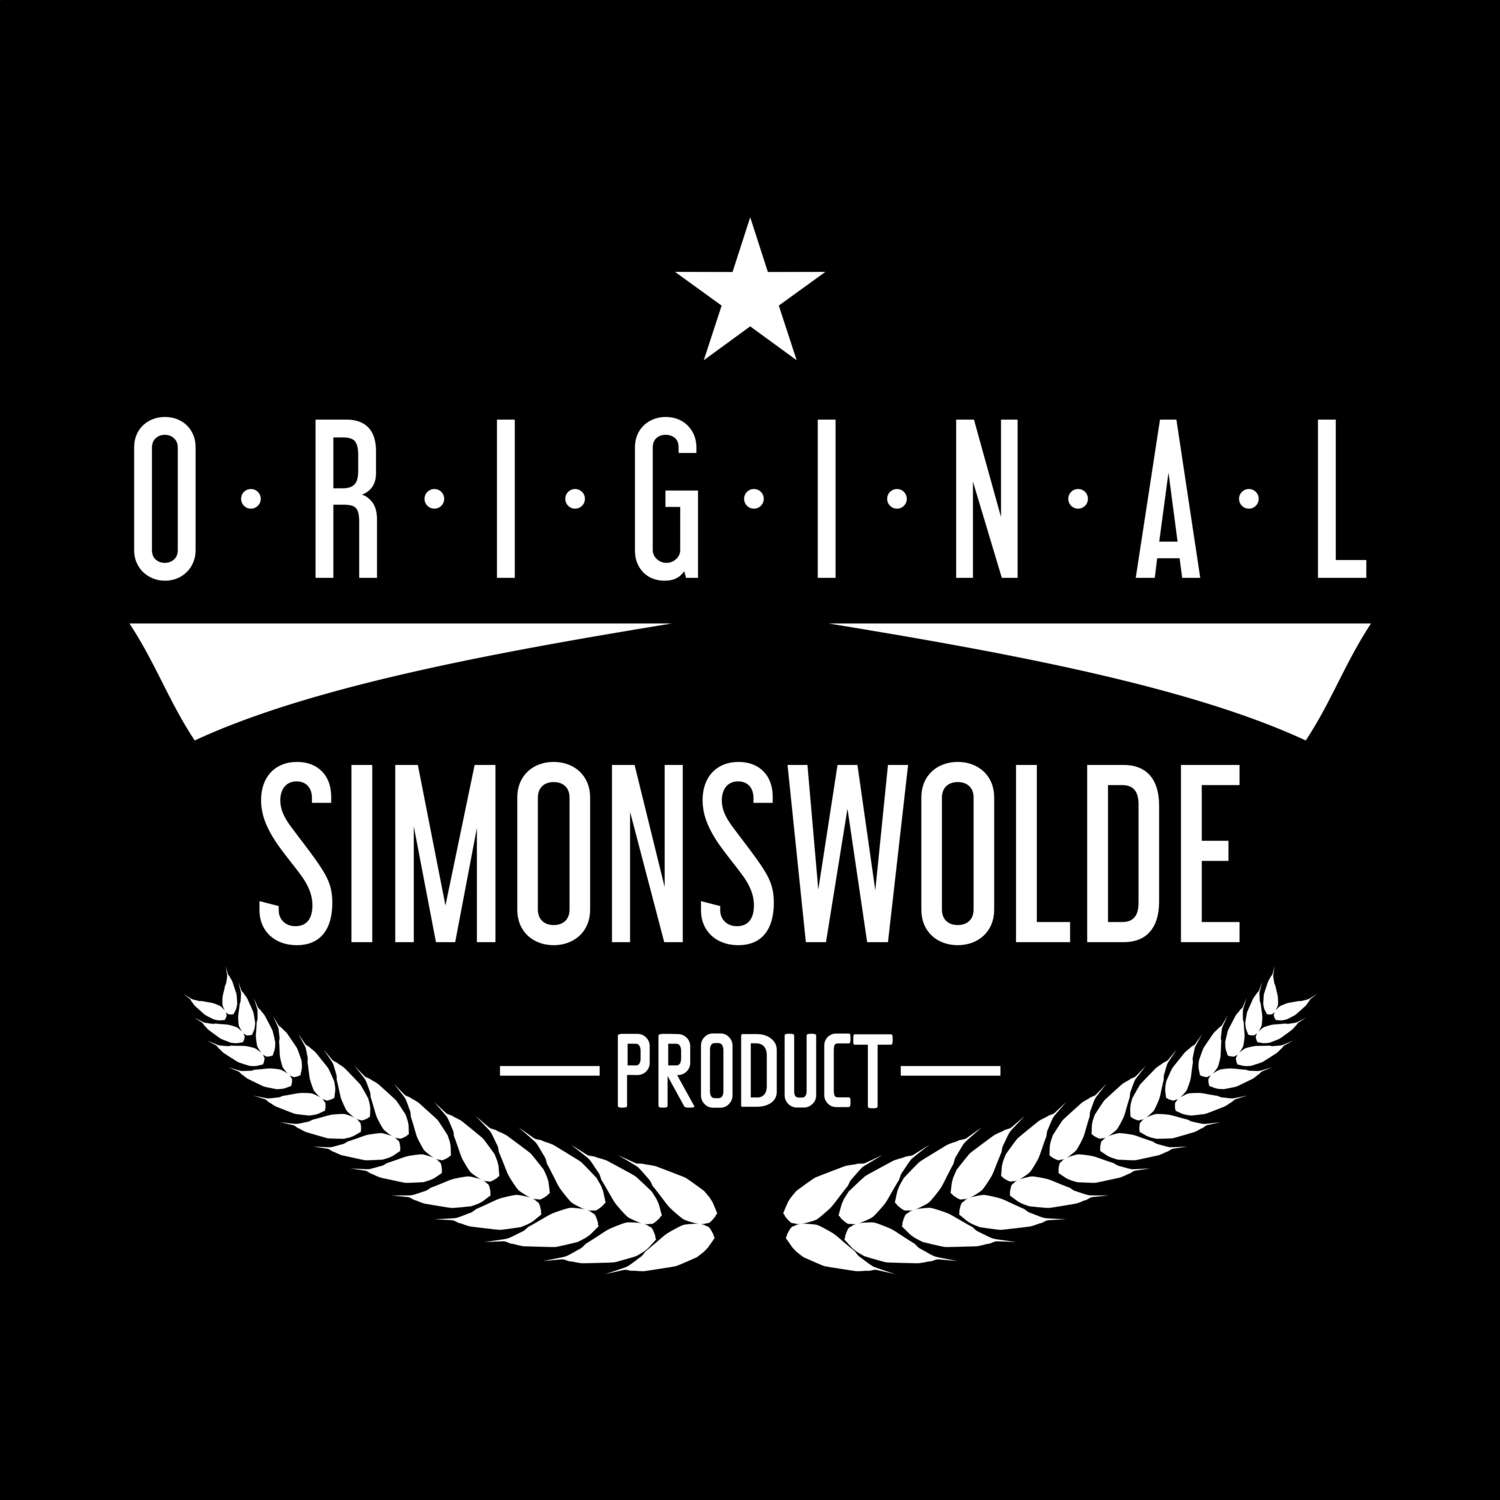 Simonswolde T-Shirt »Original Product«